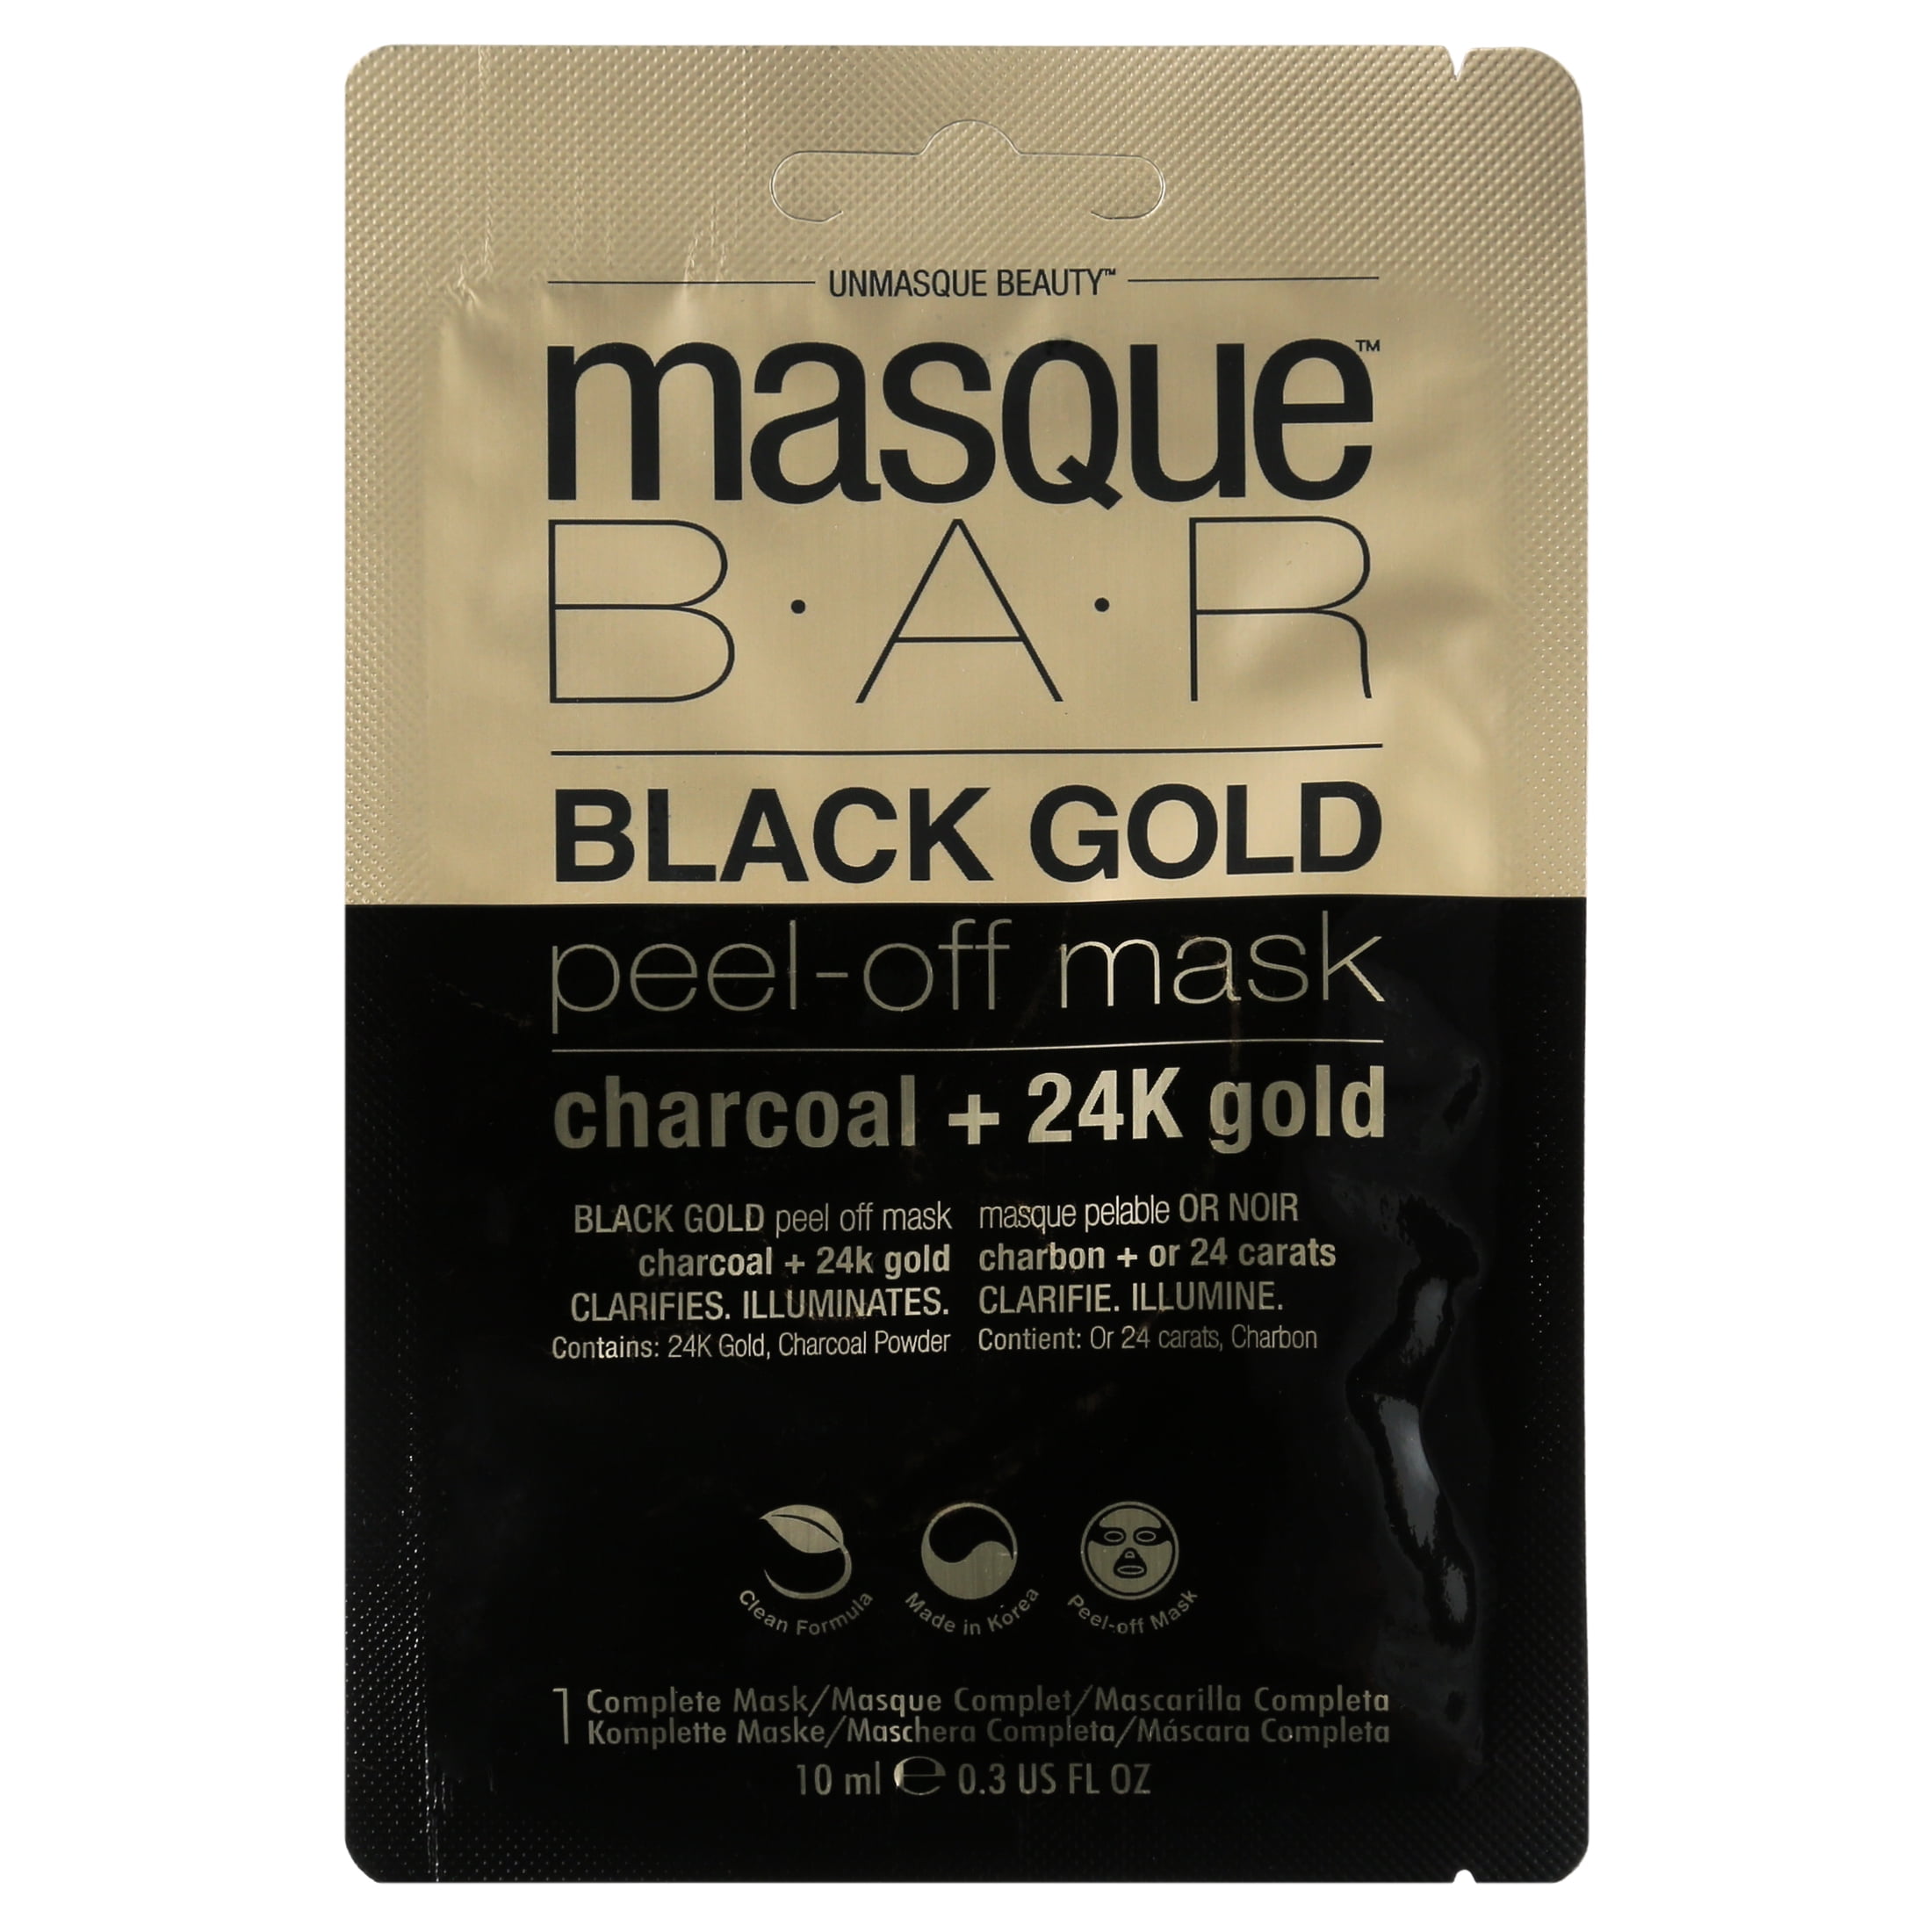 Masque Bar Black Gold Peel-Off Mask,  fl oz 